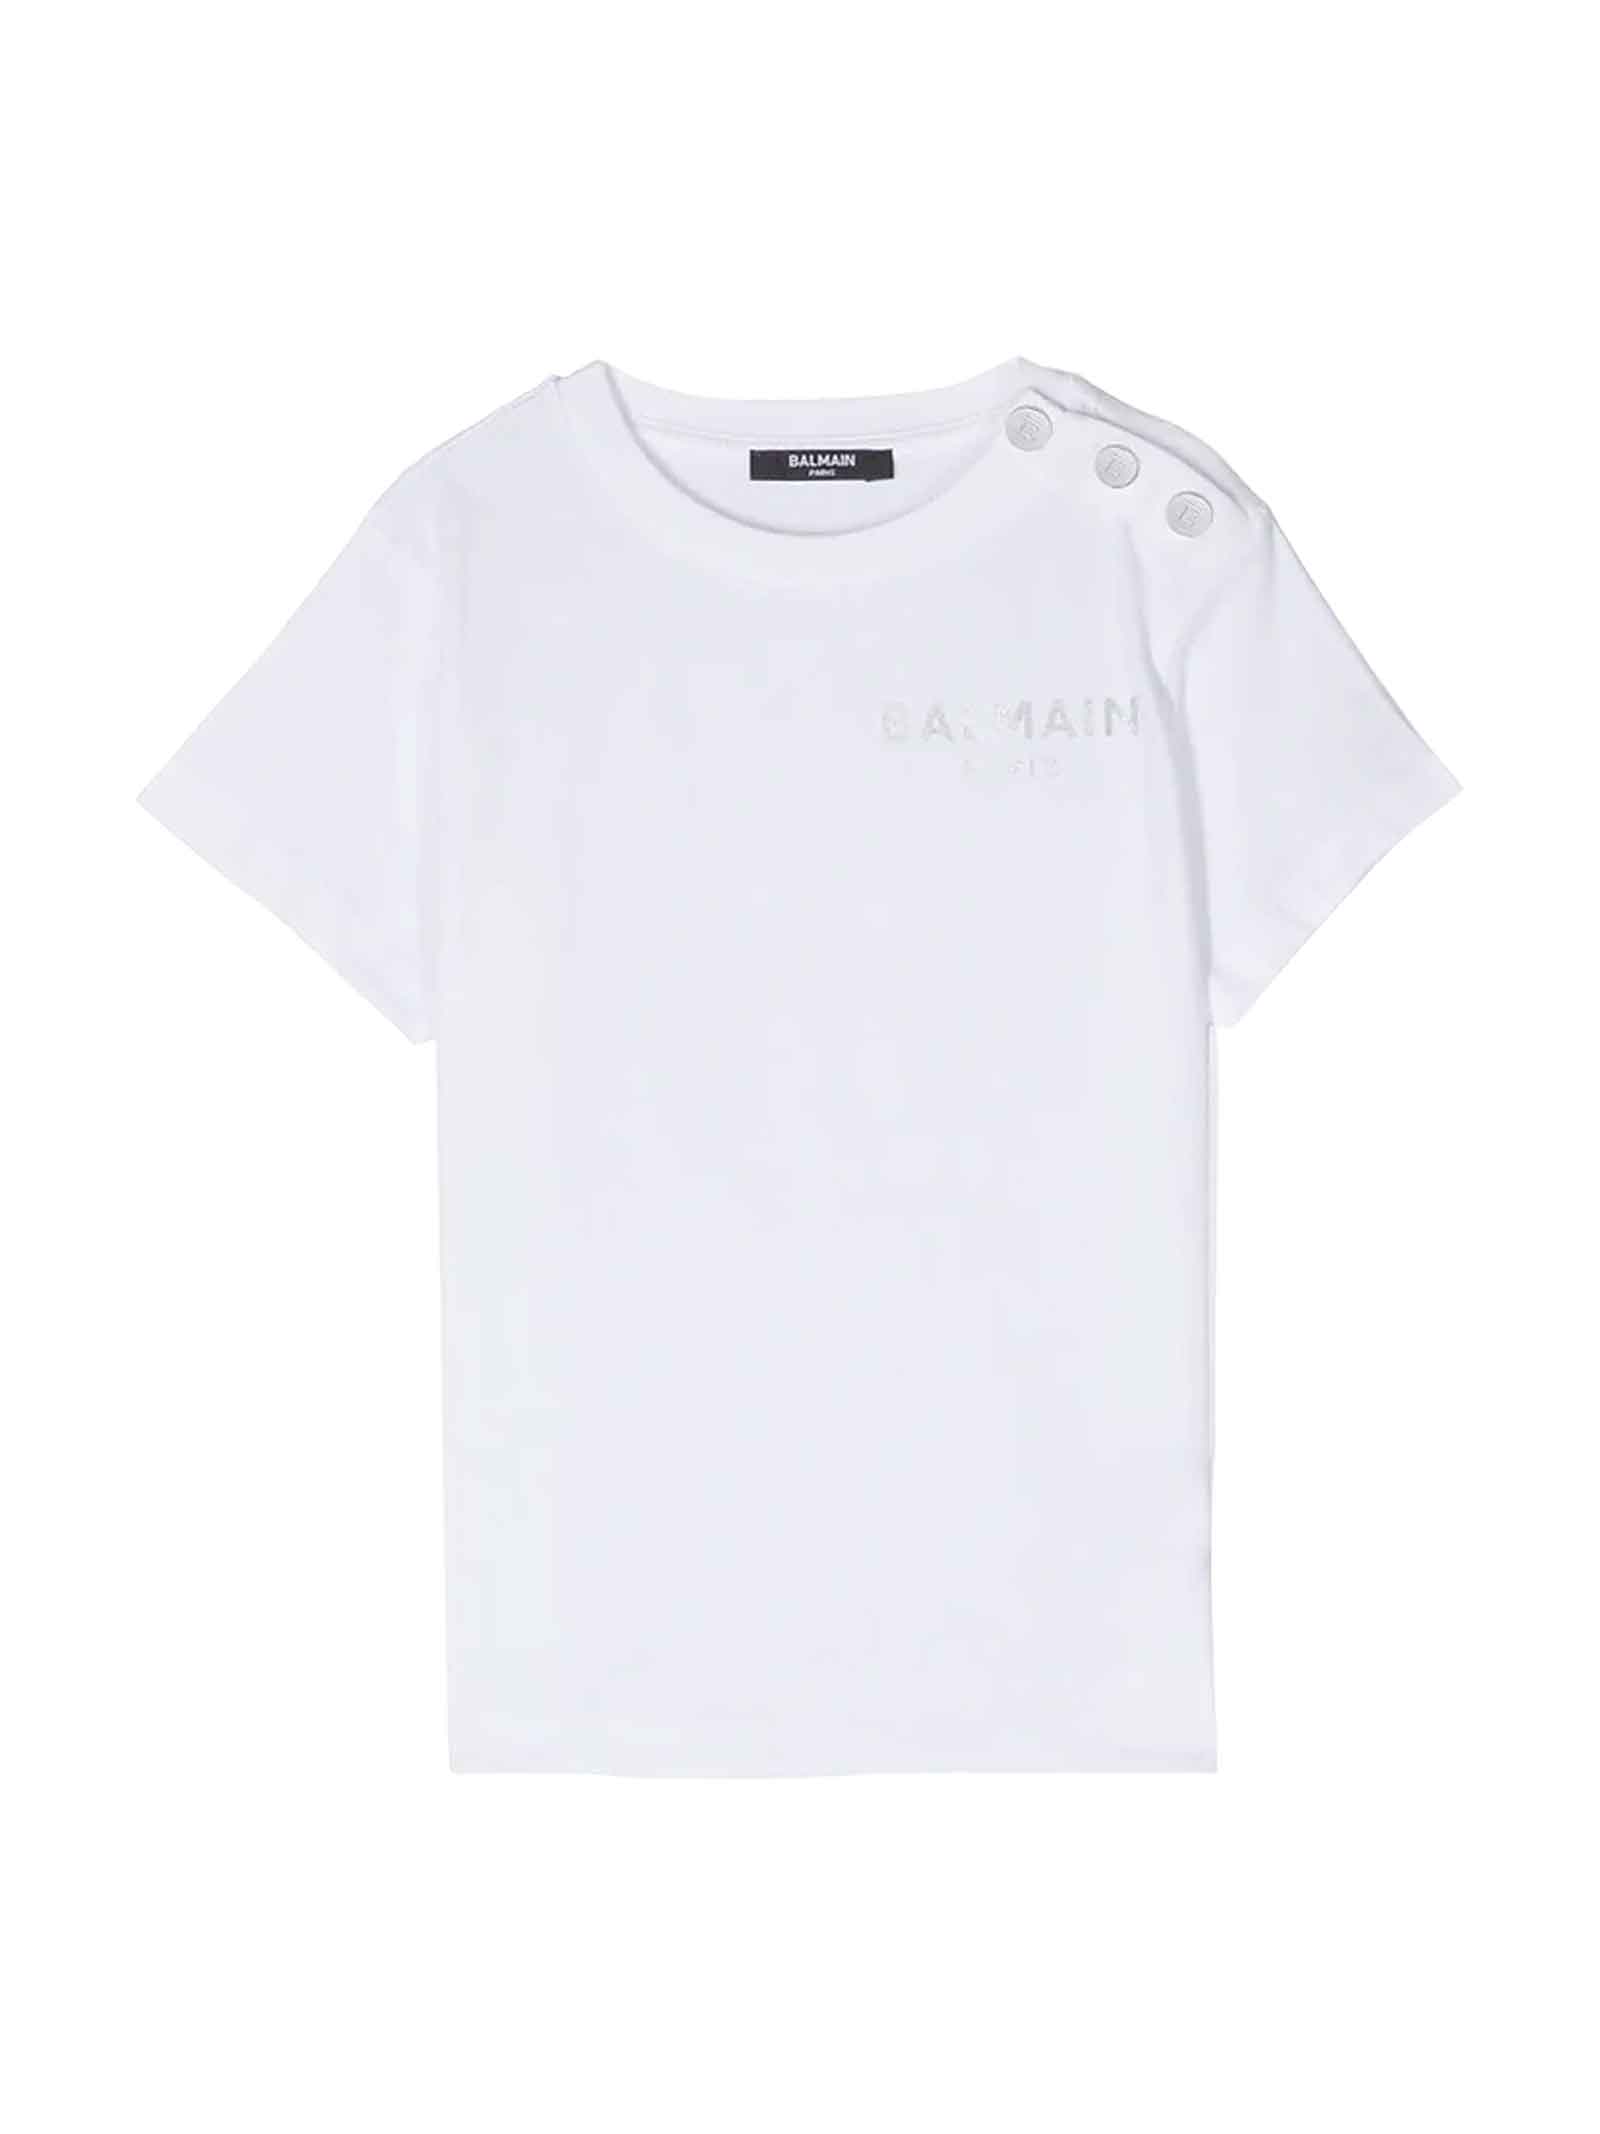 Balmain Kids' White T-shirt Girl In Bianco